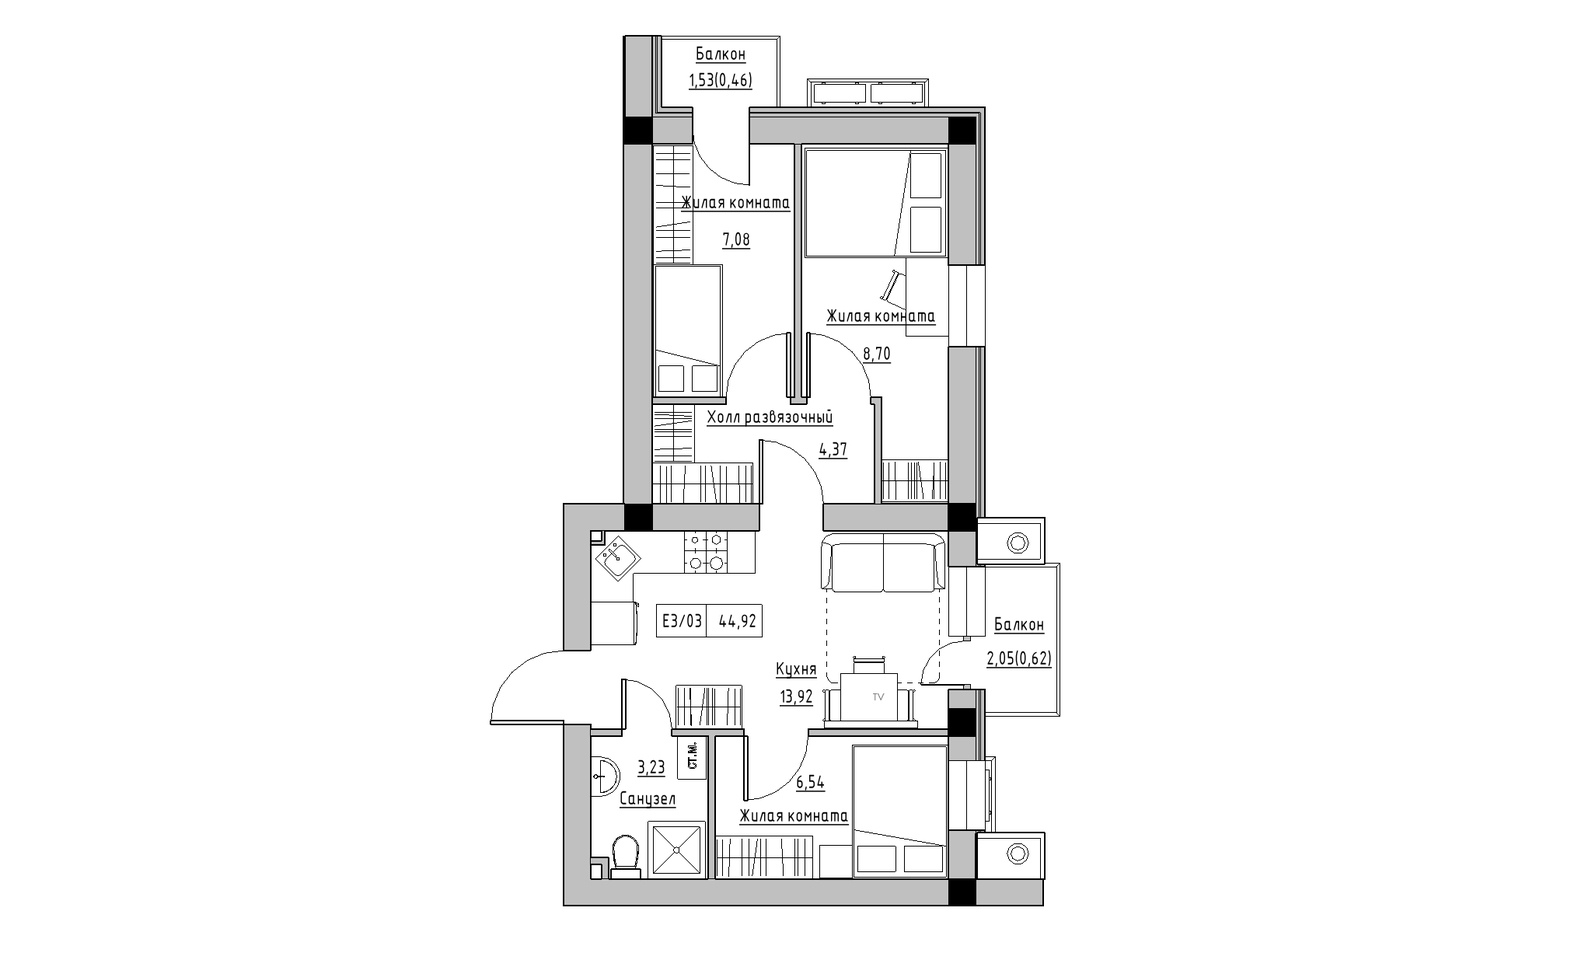 Planning 3-rm flats area 44.92m2, KS-014-05/0011.